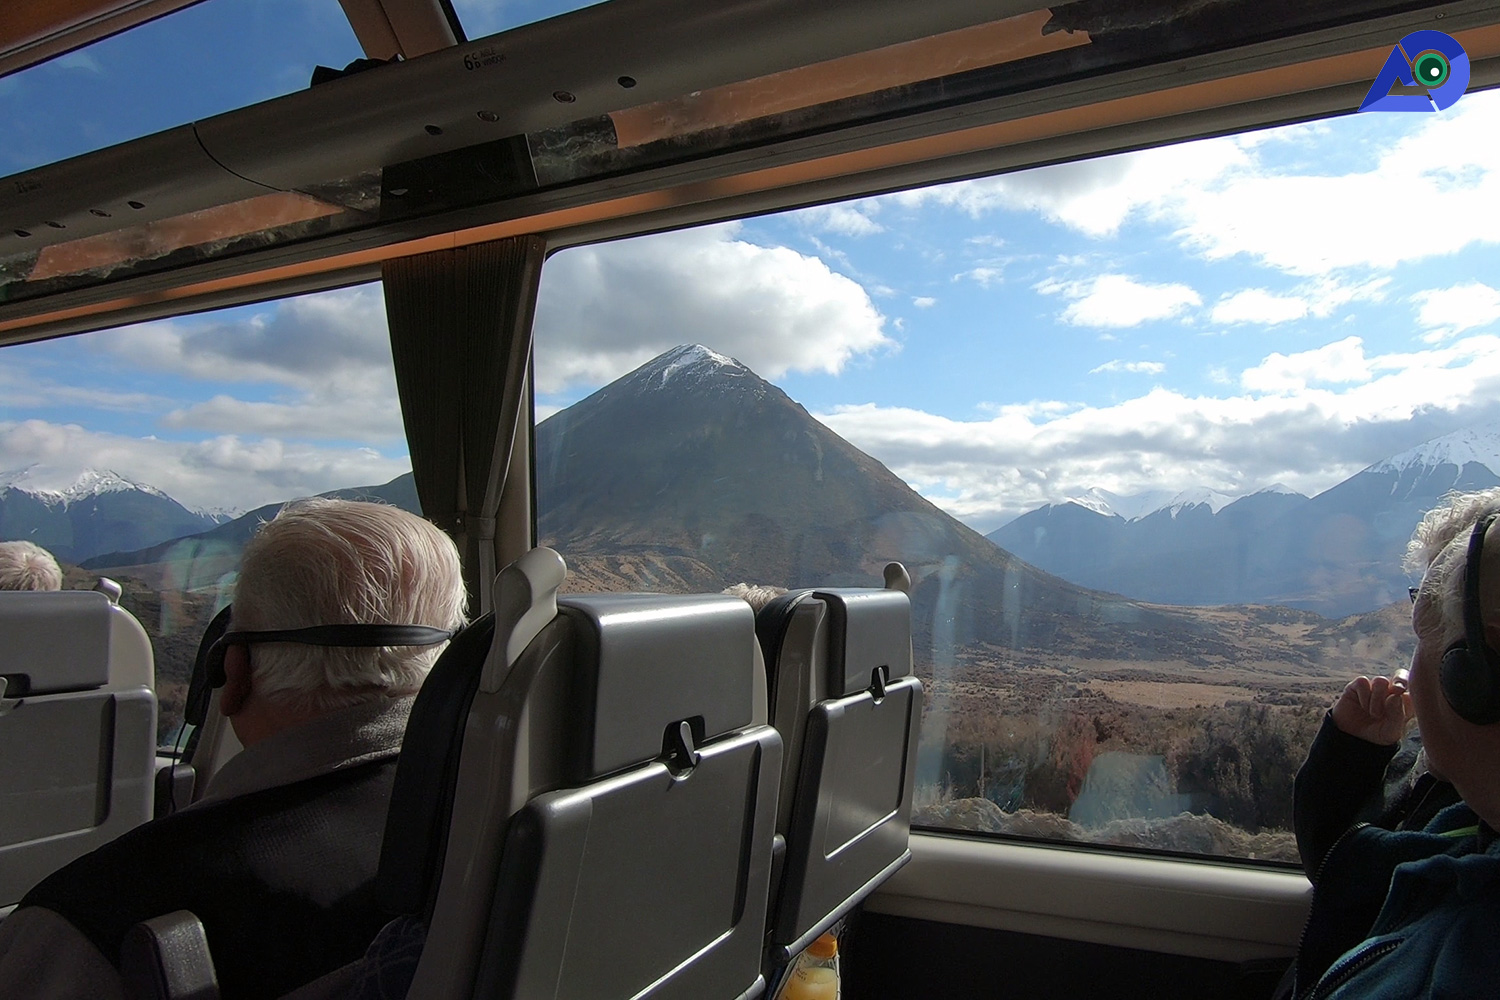 TranzAlpine - New Zealand's Most Scenic Train Journey